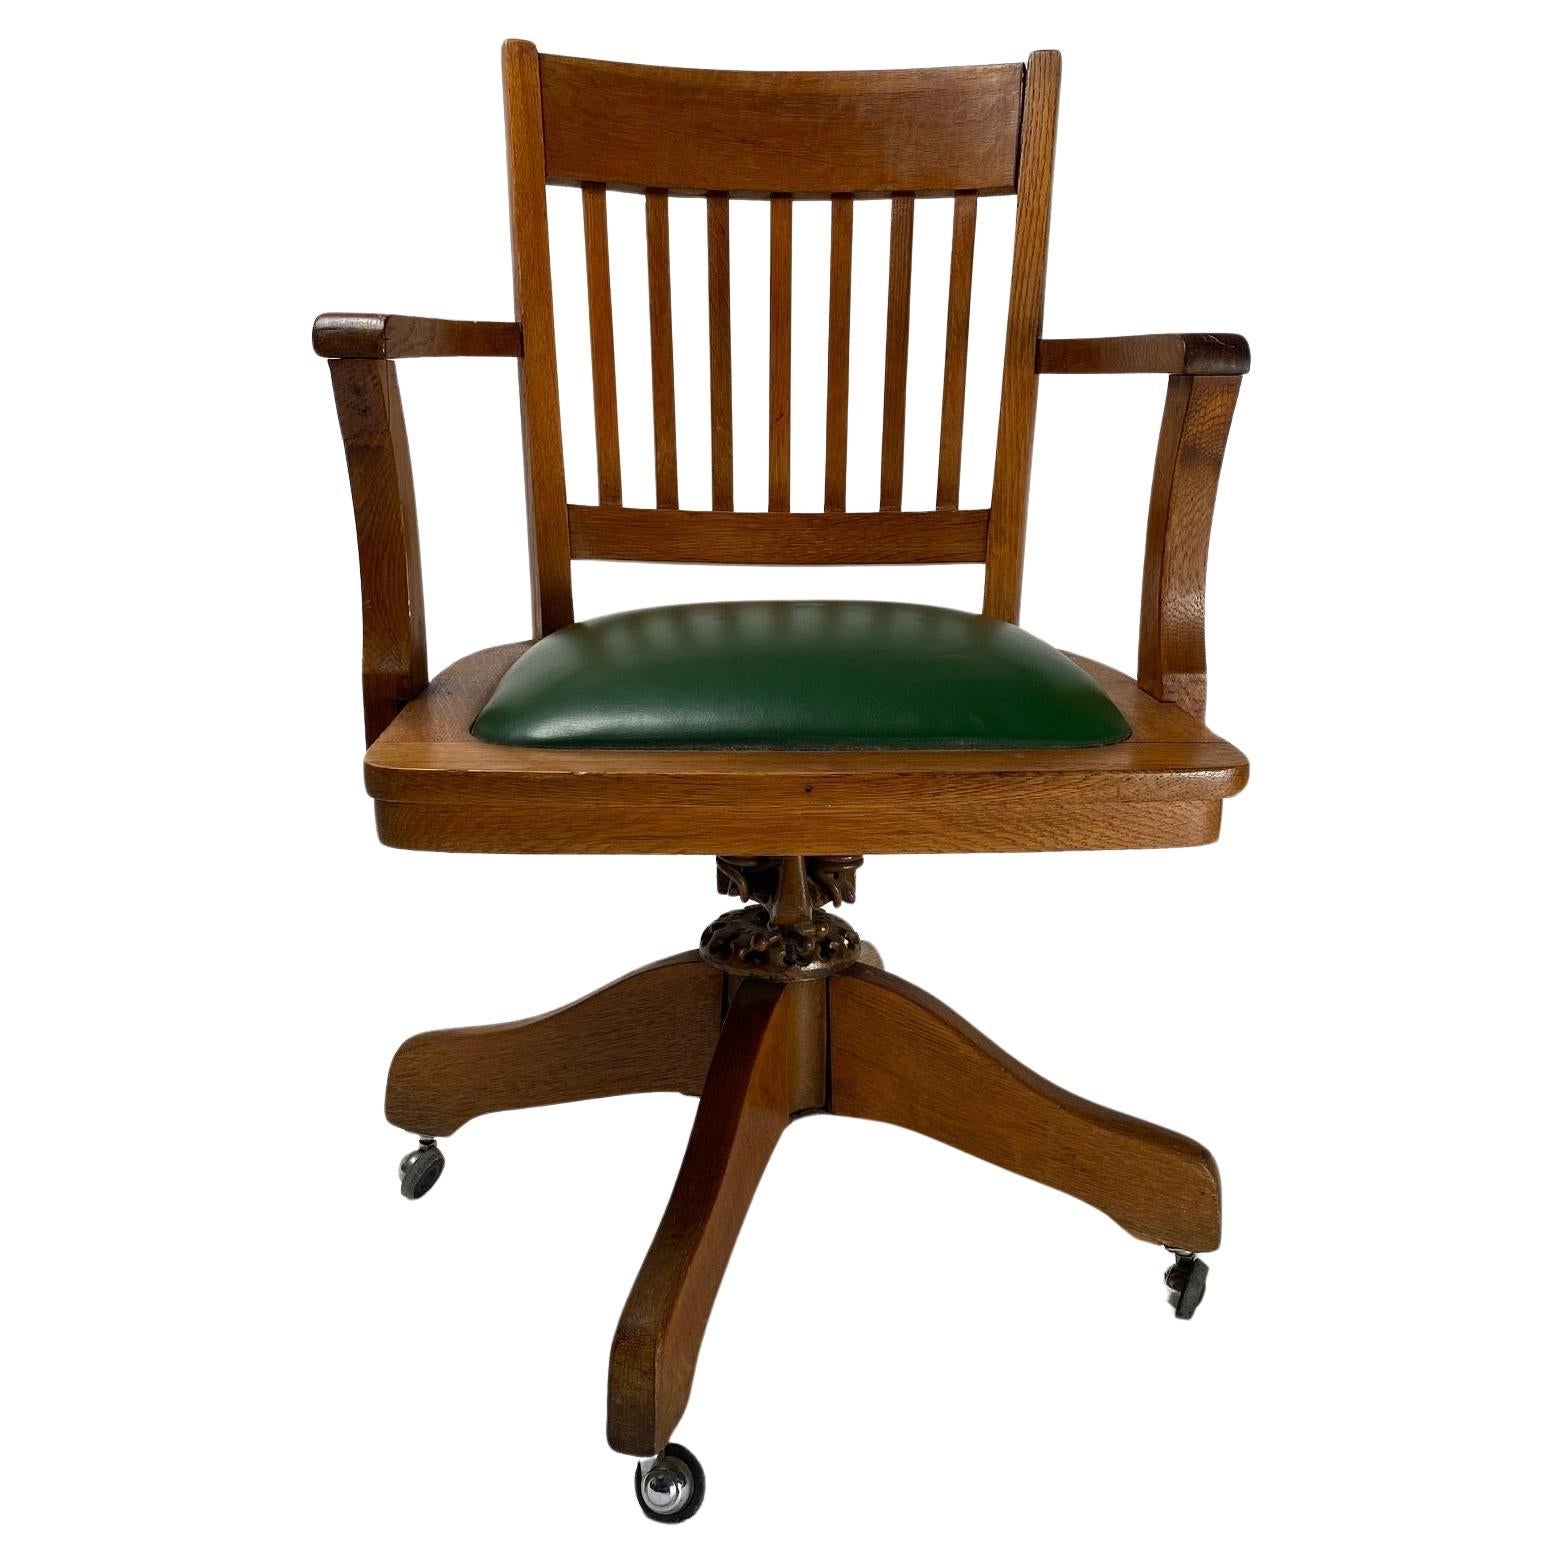 Did Thomas Jefferson create the swivel chair?